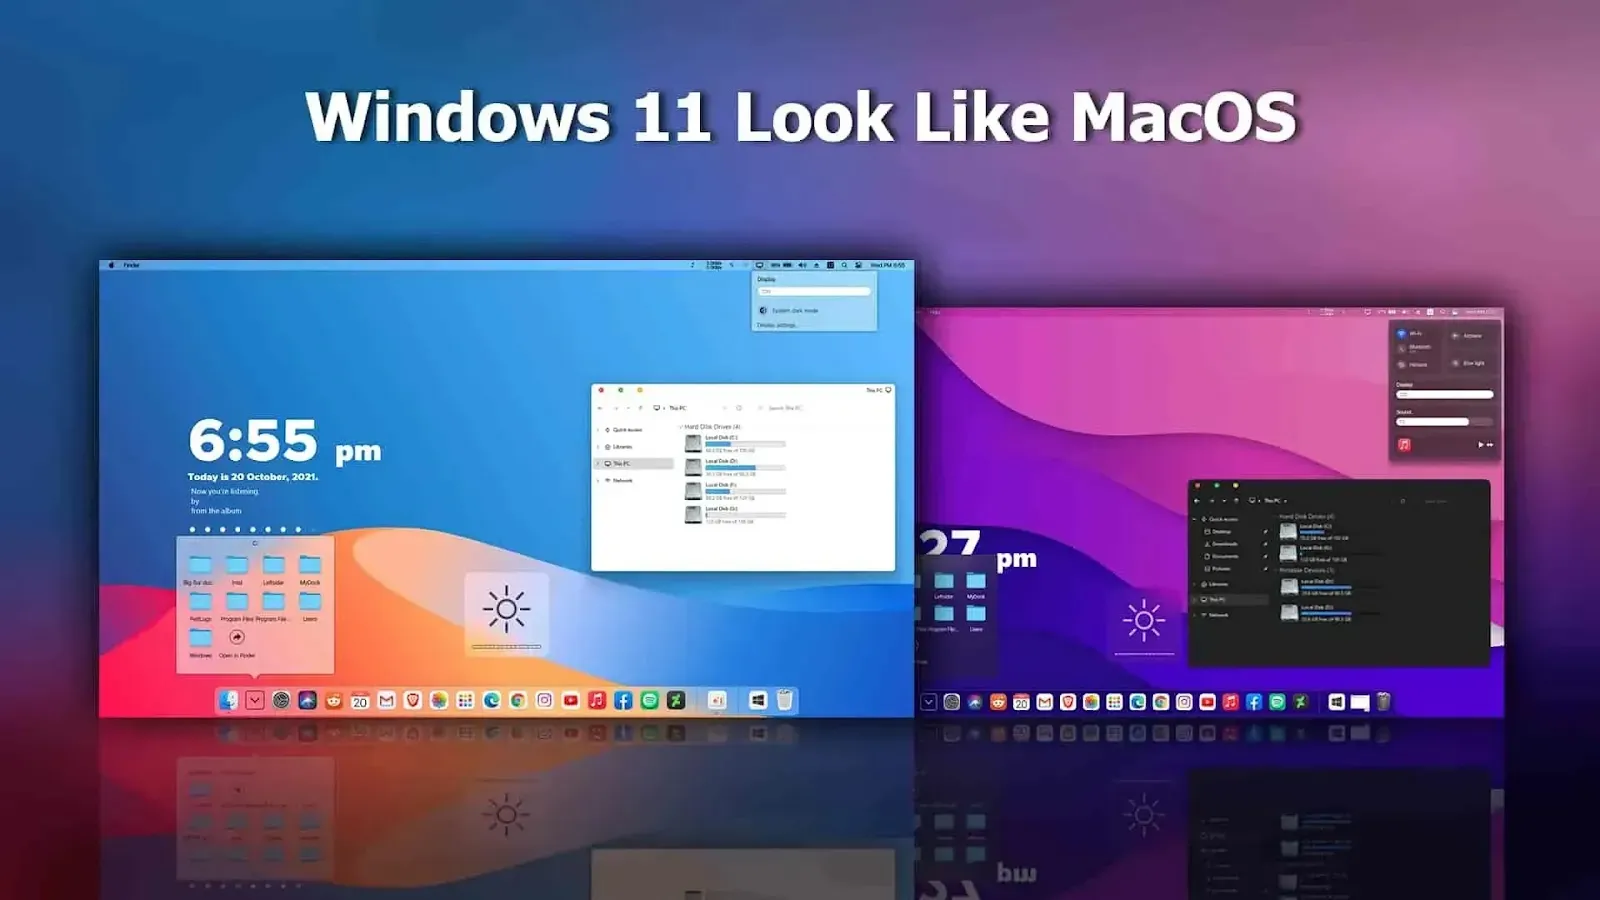 MacOS Theme For Windows